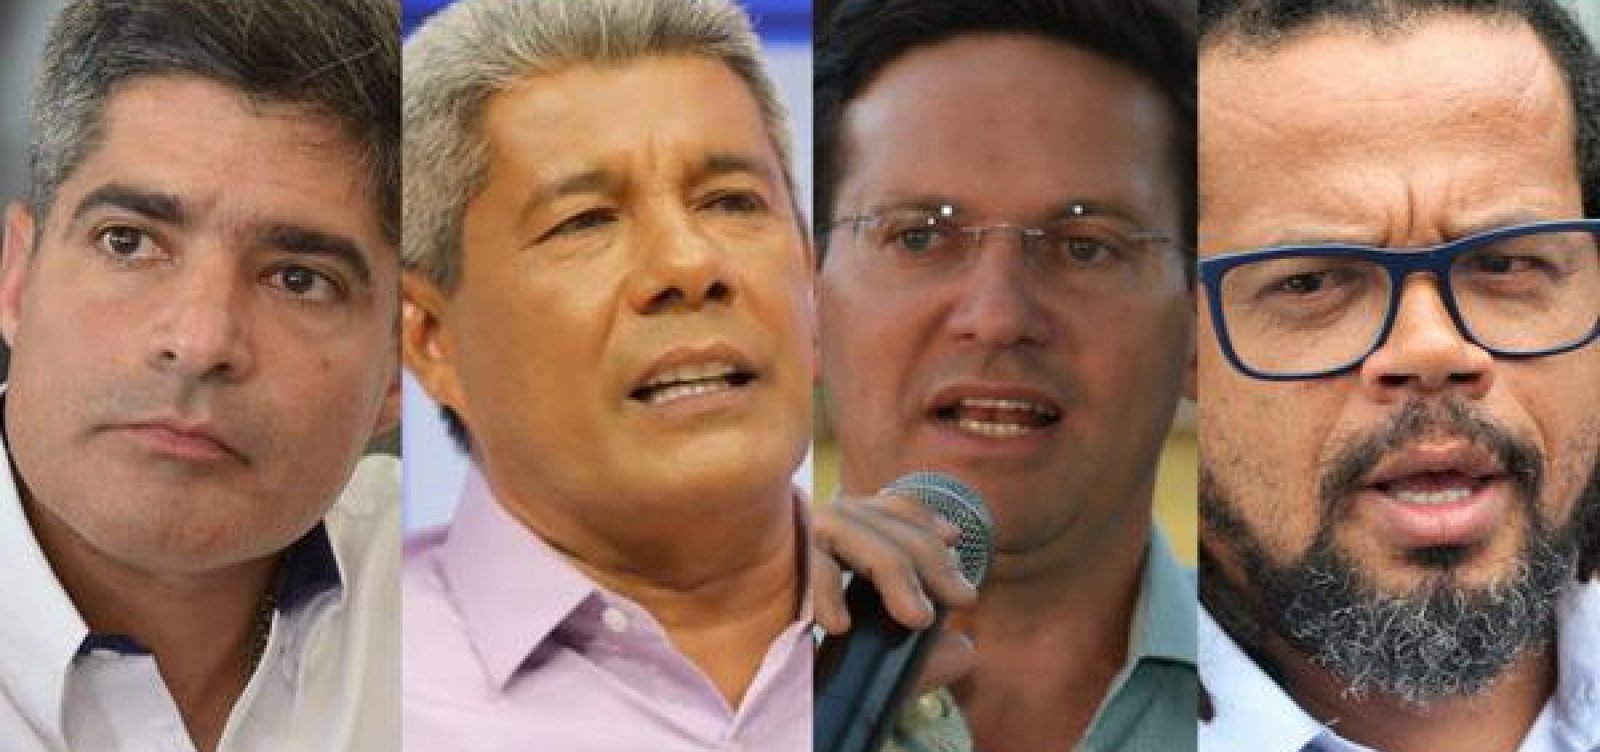 Confira a agenda dos candidatos ao governo da Bahia nesta quinta-feira